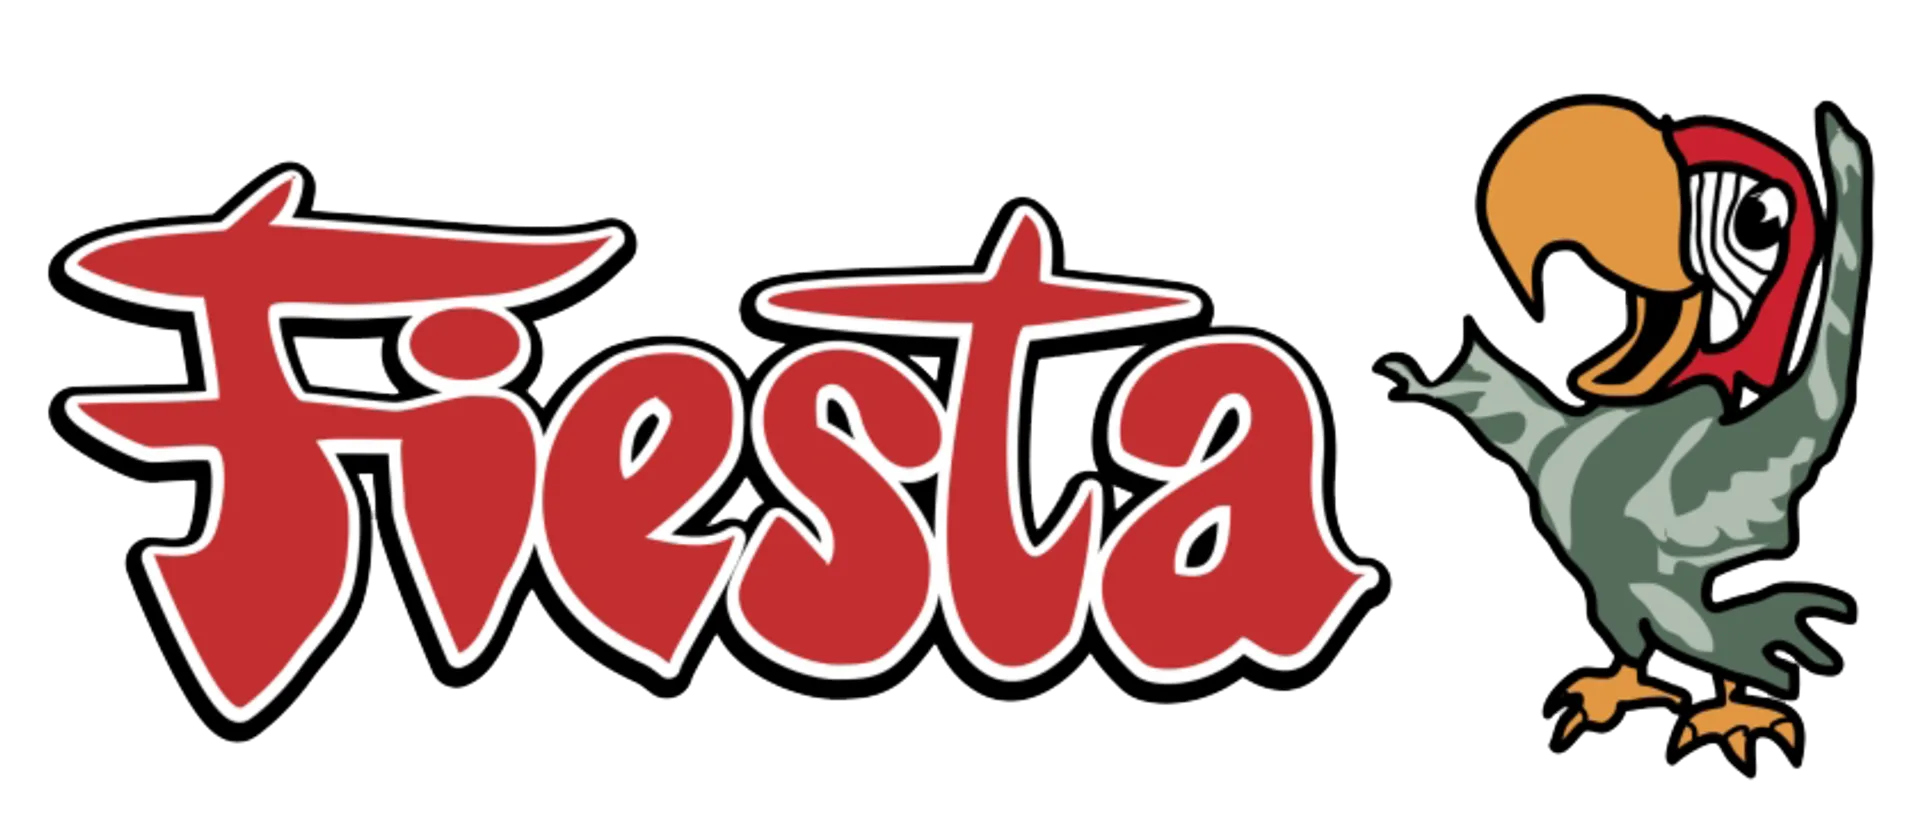 FIESTA MART logo de catálogo